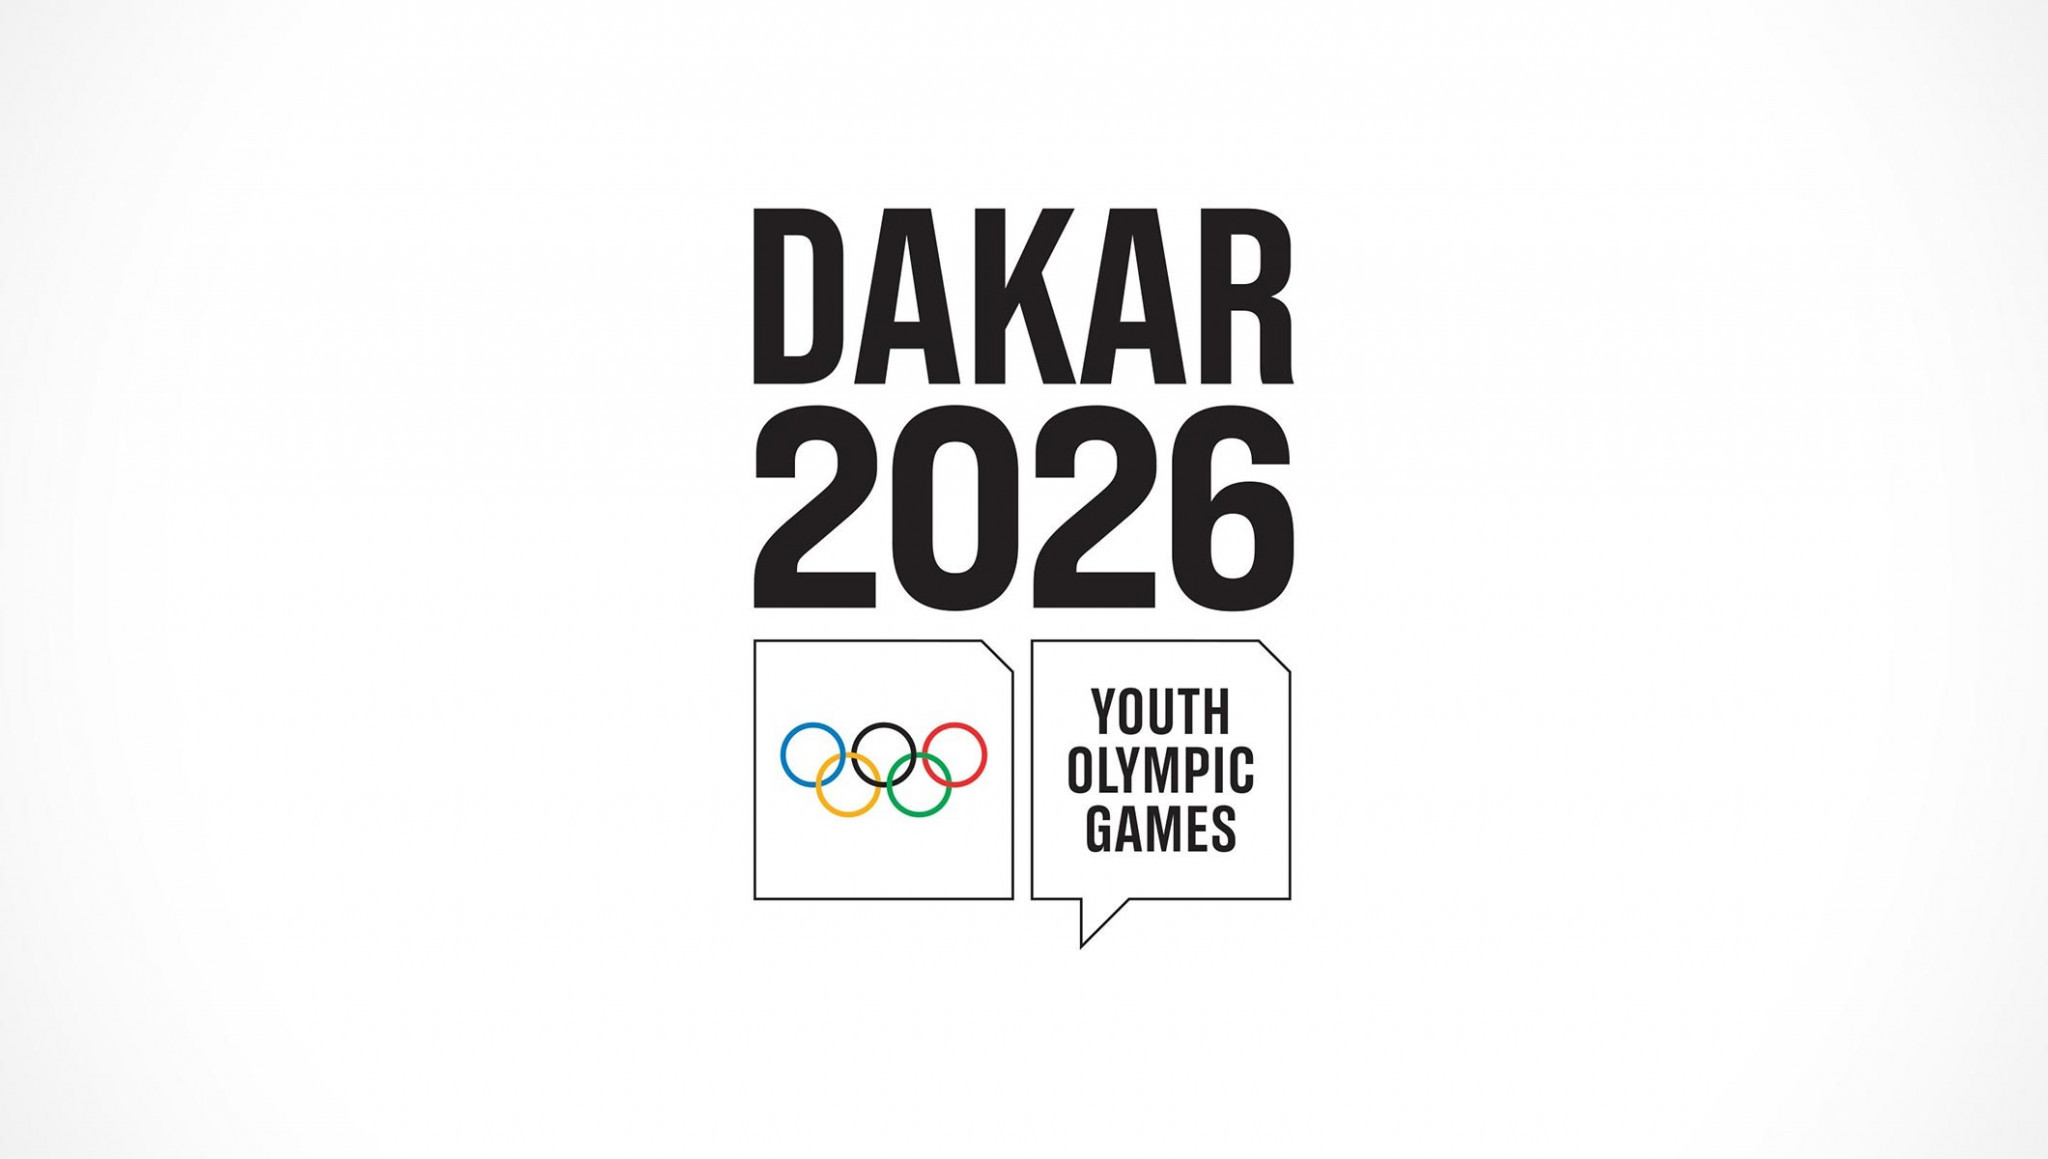 Dakar 2026 sports development initiatives in Senegal to begin in first half of 2022